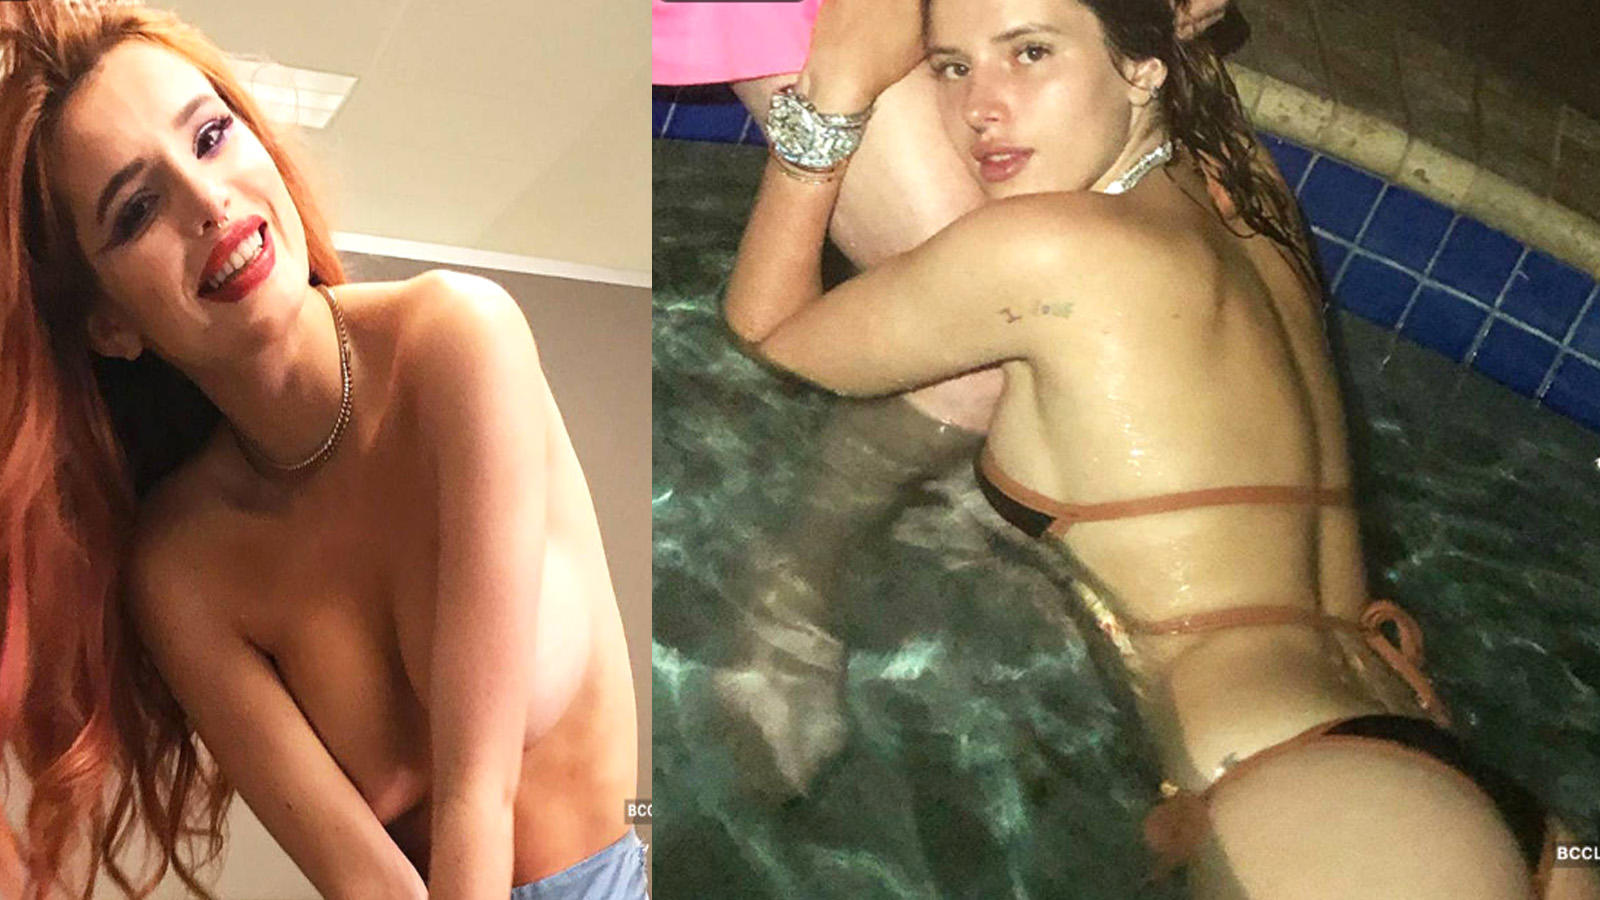 Bella thorne released nude photos